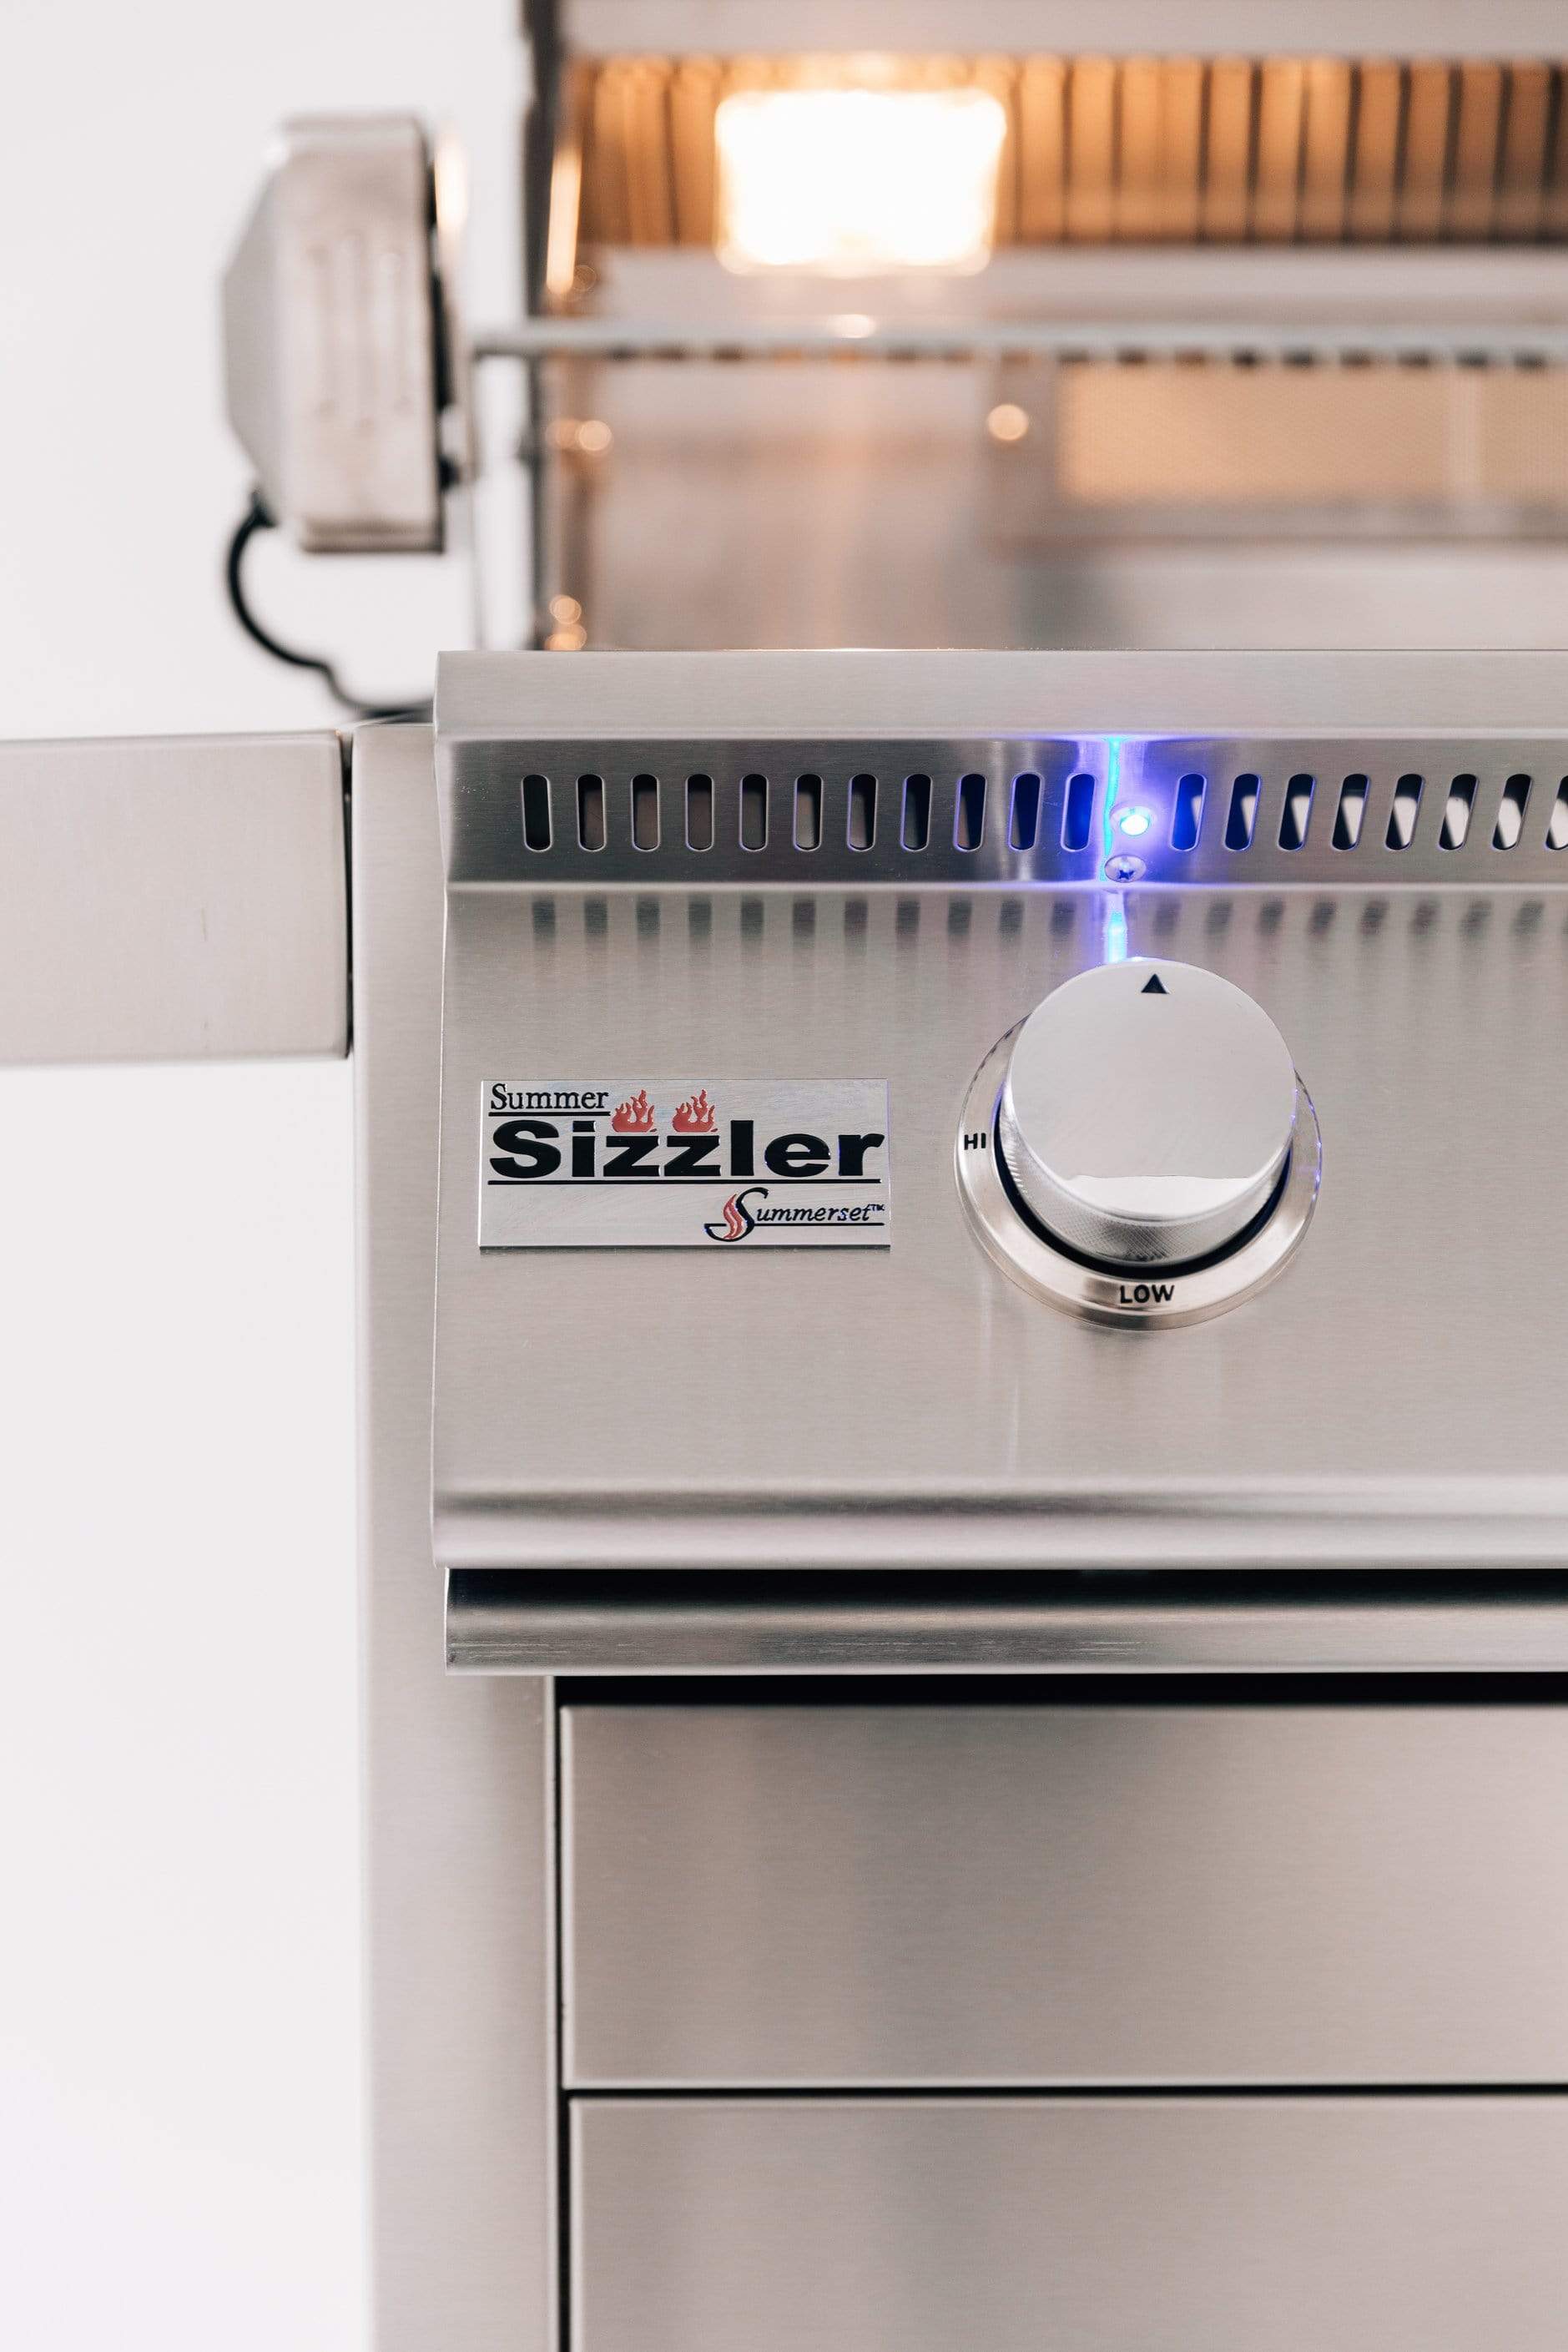 Summerset Sizzler Pro 40" 5-Burner Built-In Gas Grill SIZPRO40